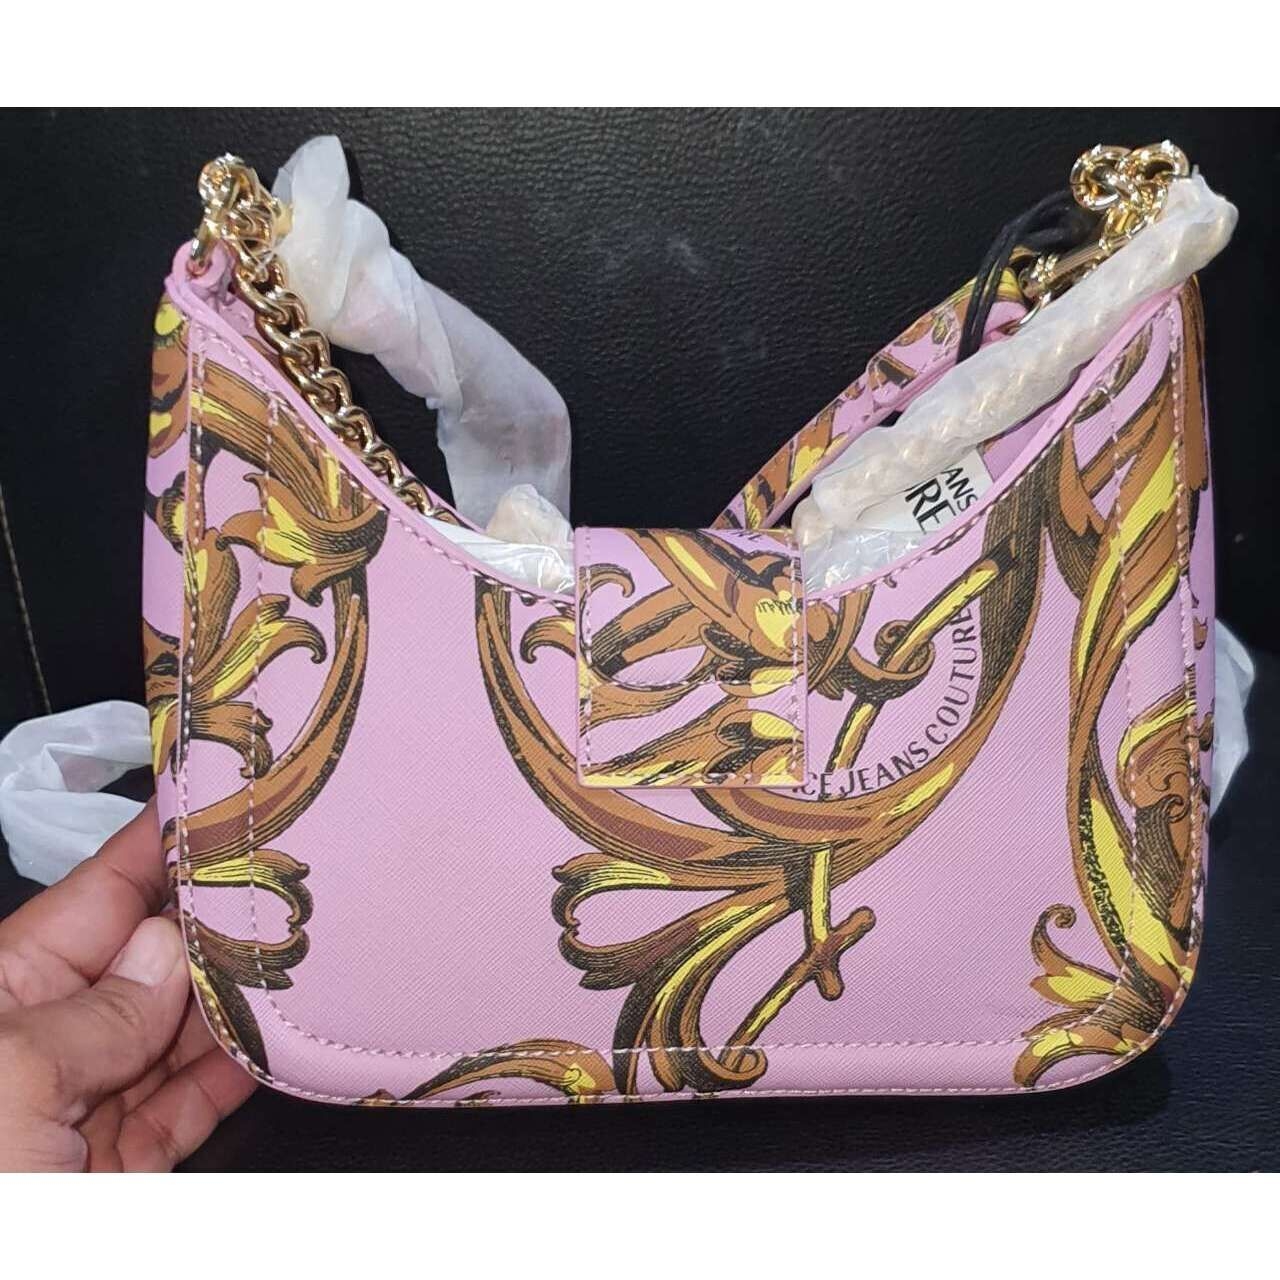 Versace Jeans Couture Pink Baroque Buckle Shoulder Bag